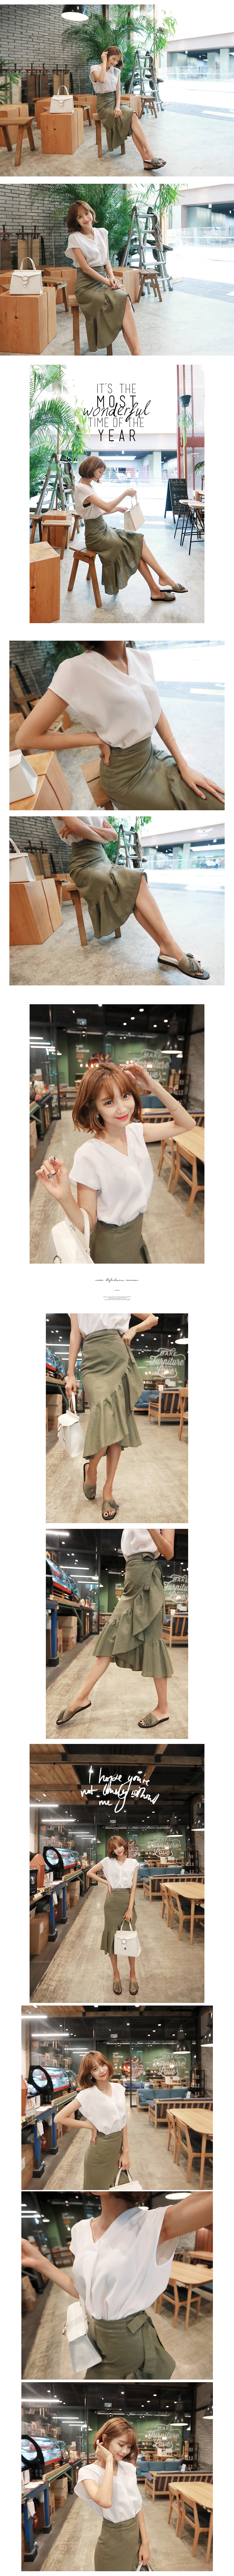 [Set] White V-neck Blouse and Oblique Ruffle Wrap Skirt One Size(S-M)